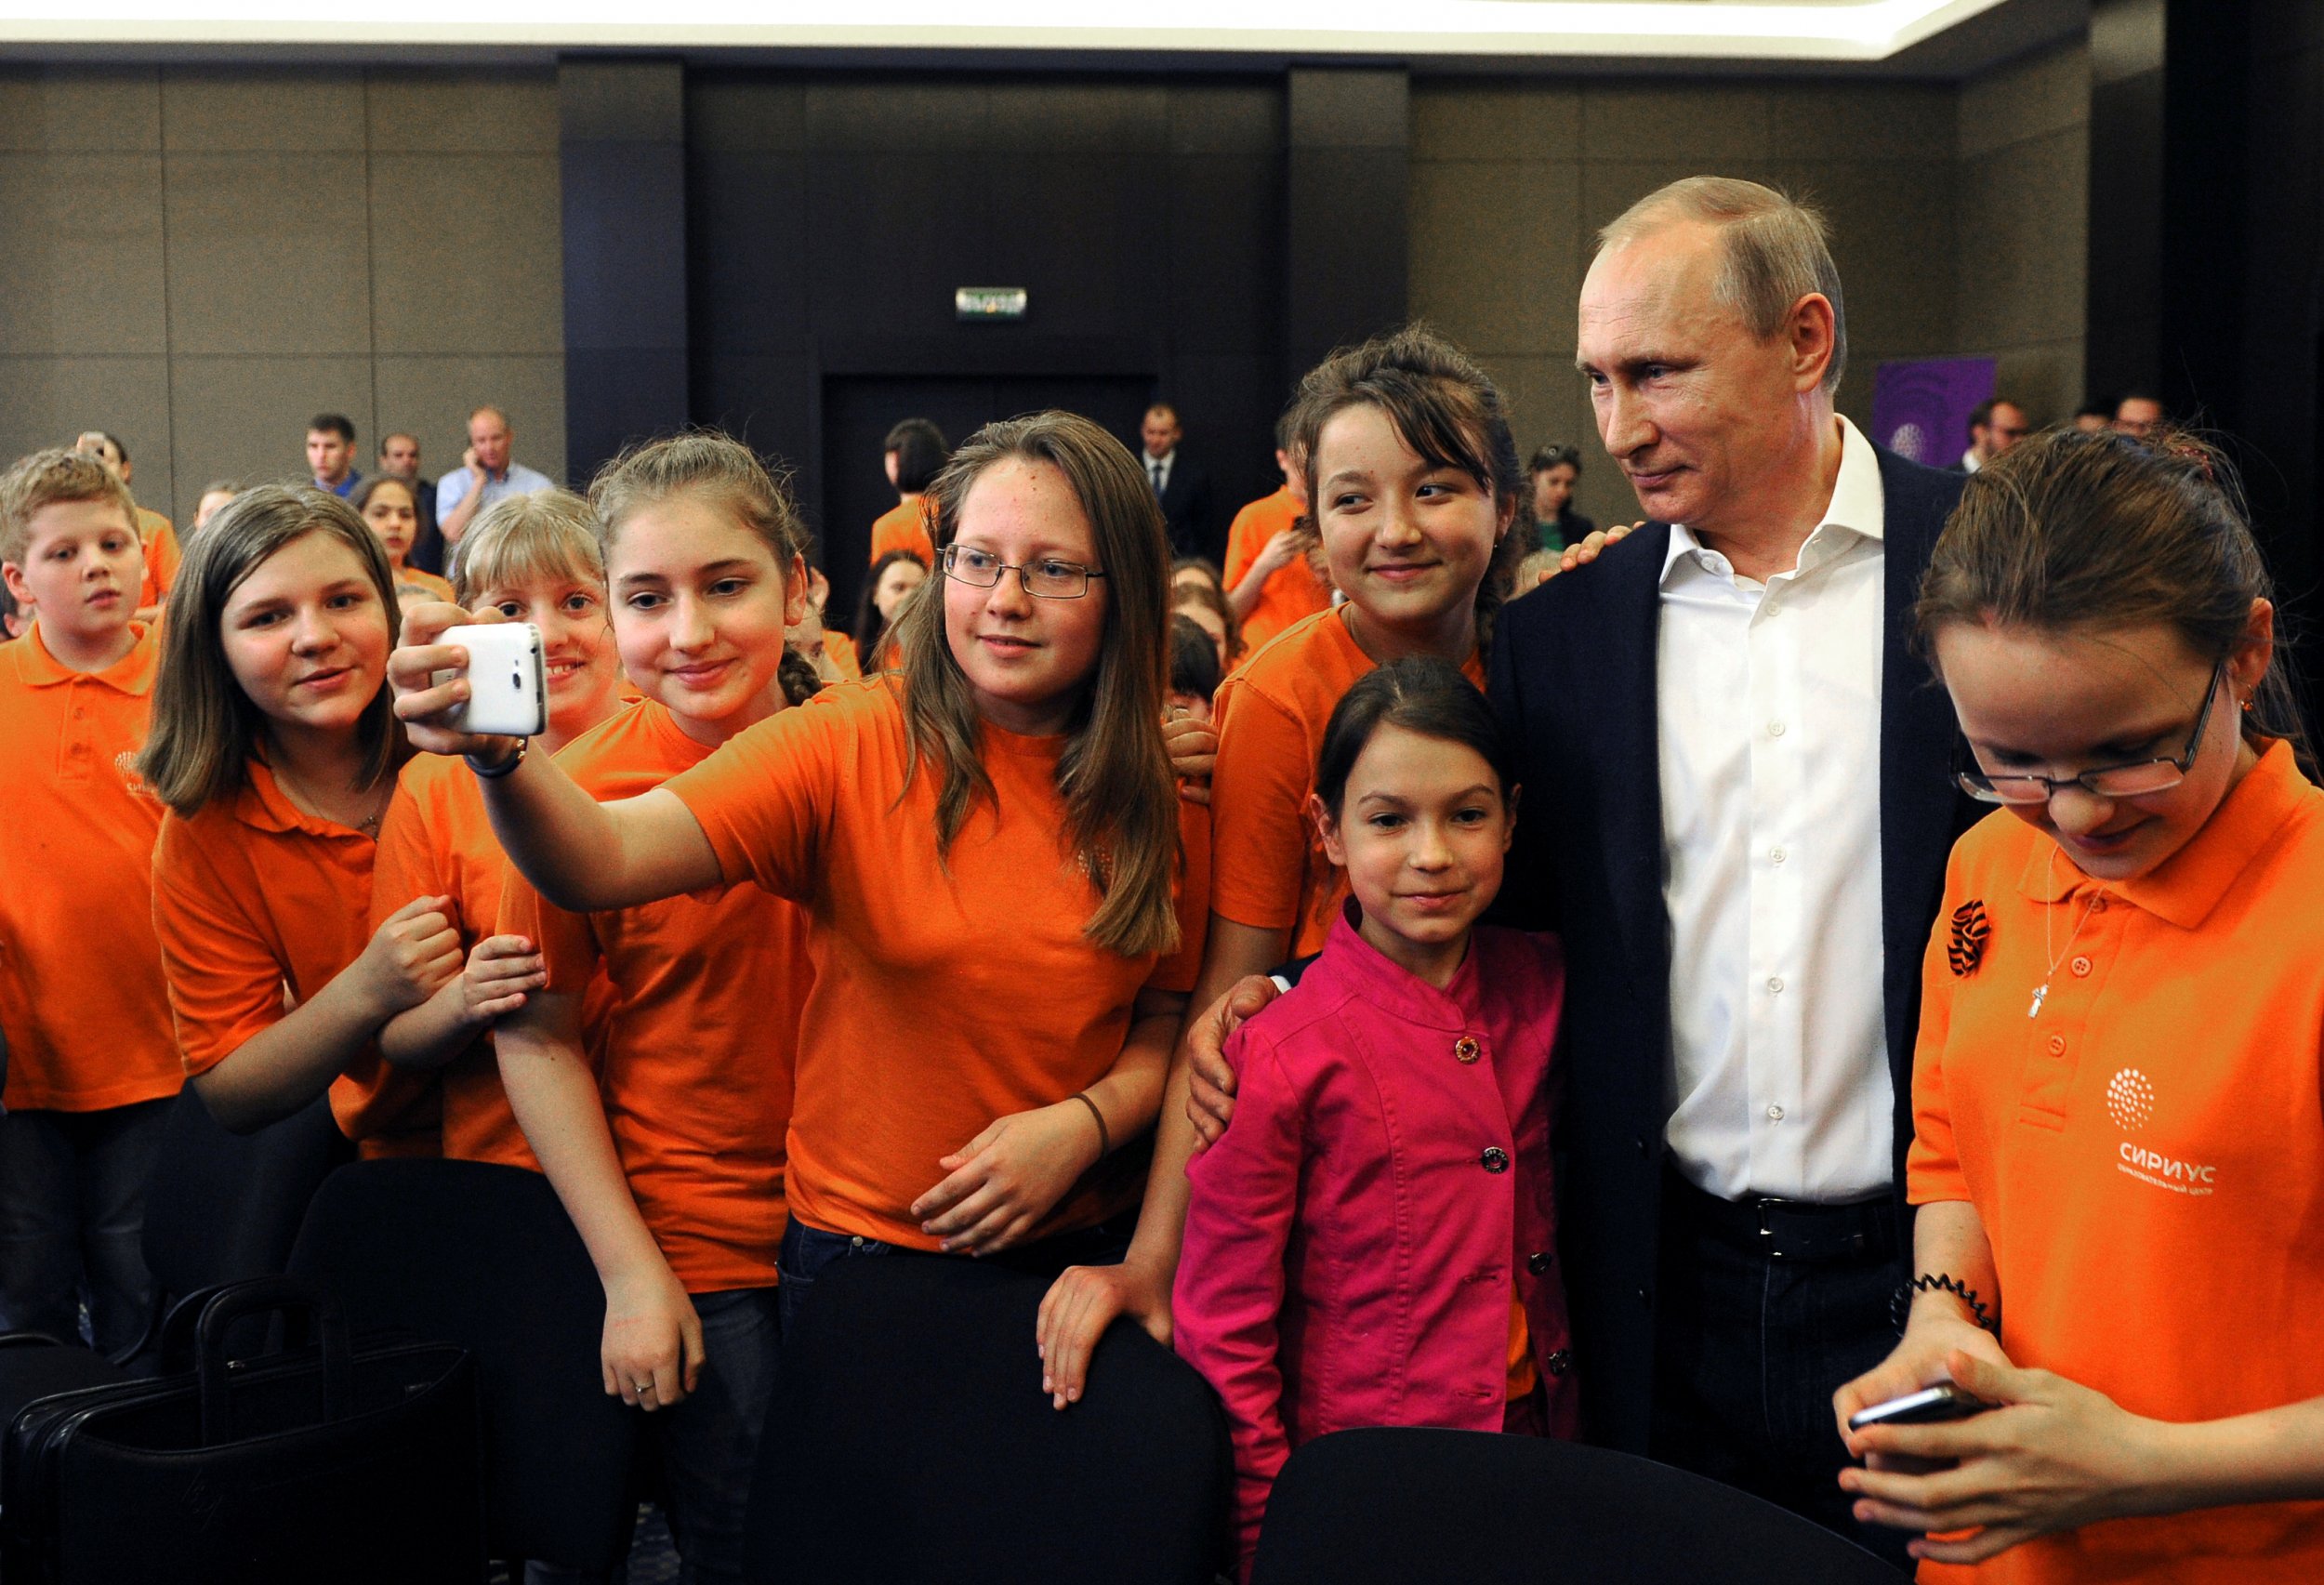 Putin with kids